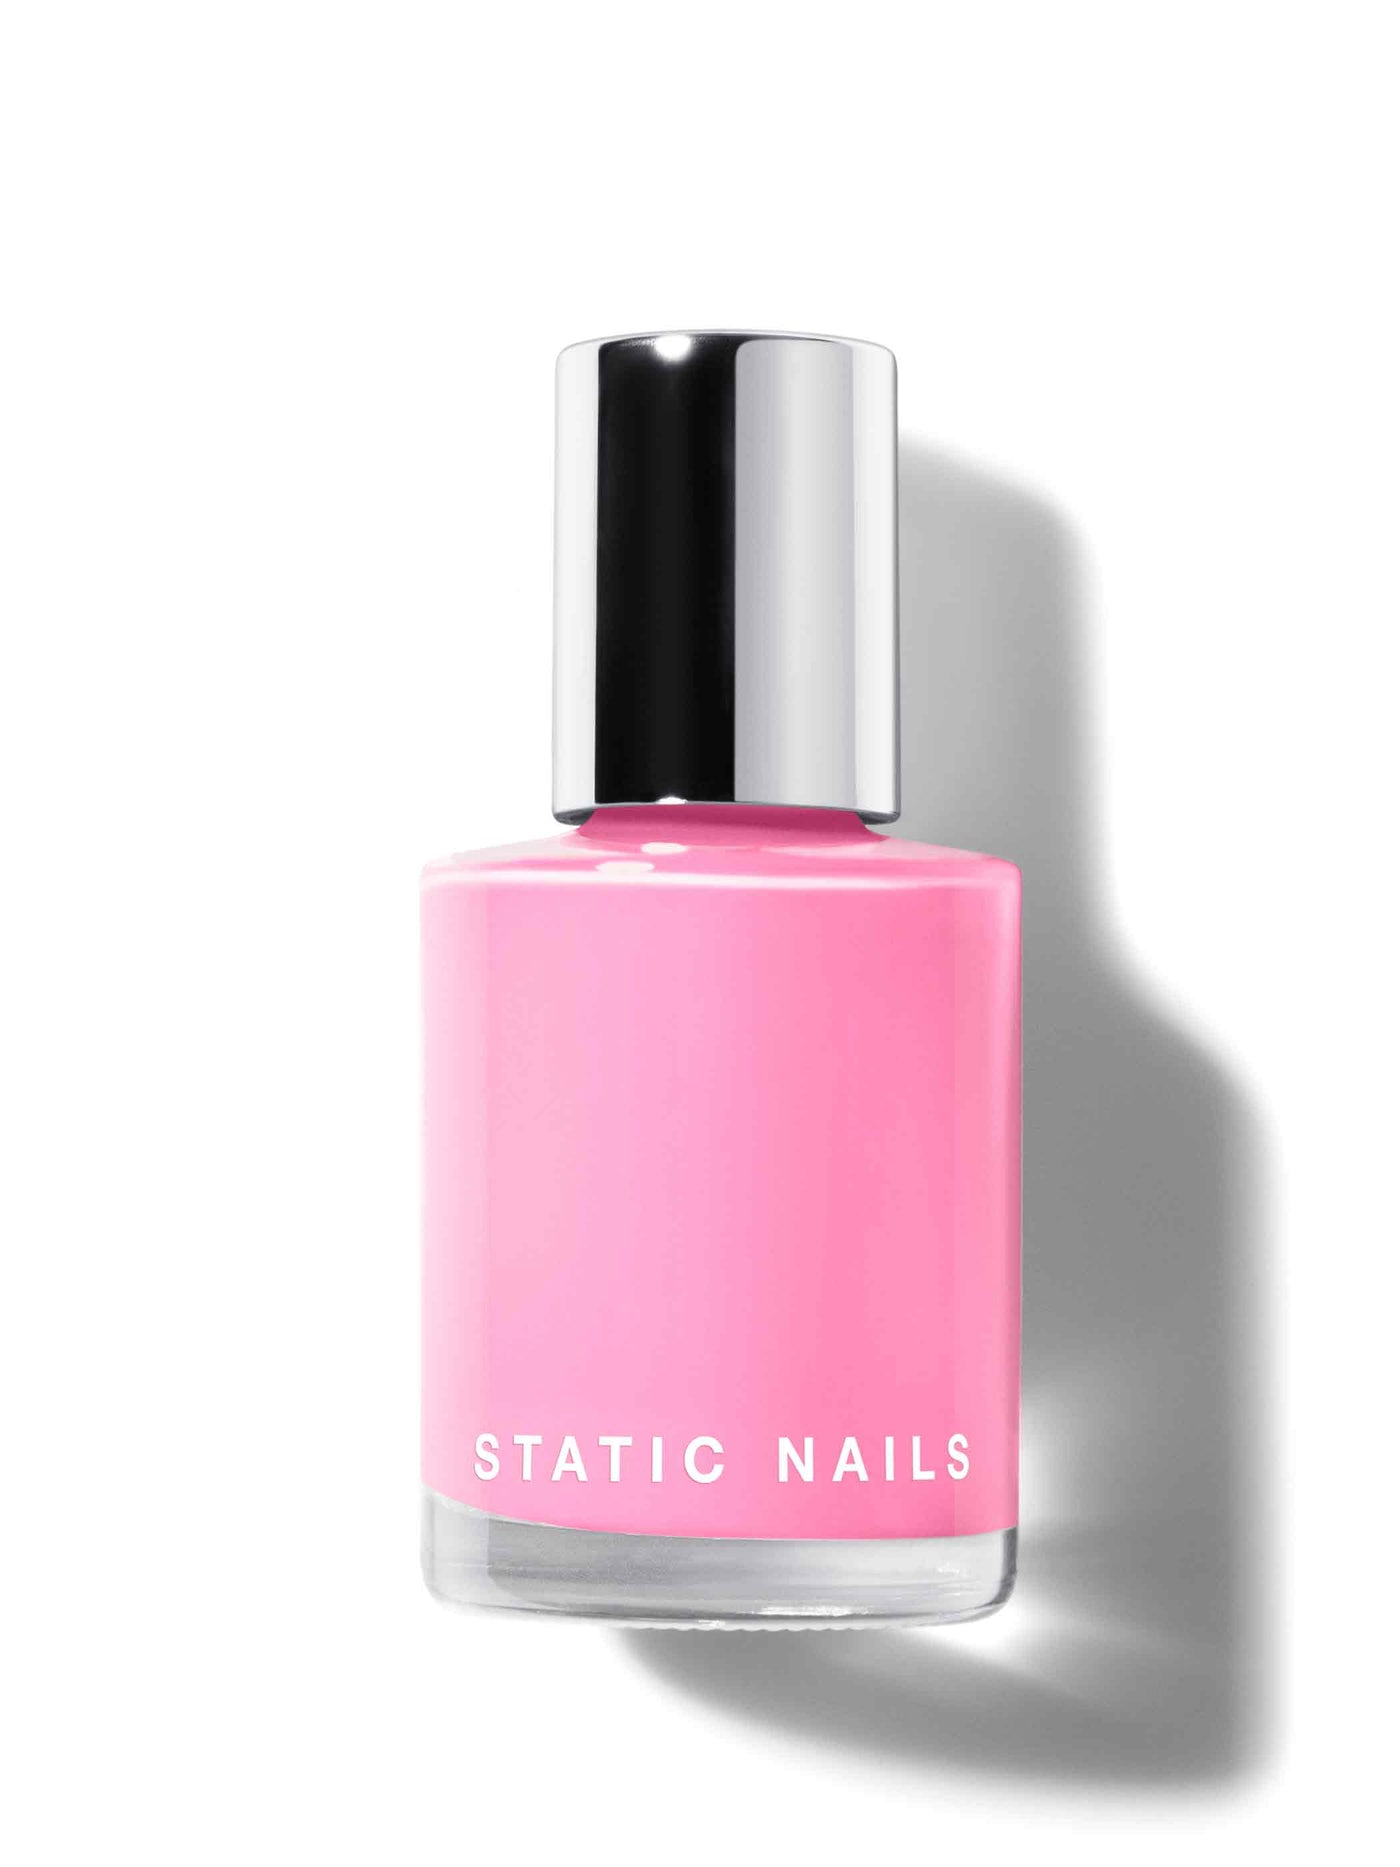 Neon pastel pink, full-coverage nail polish